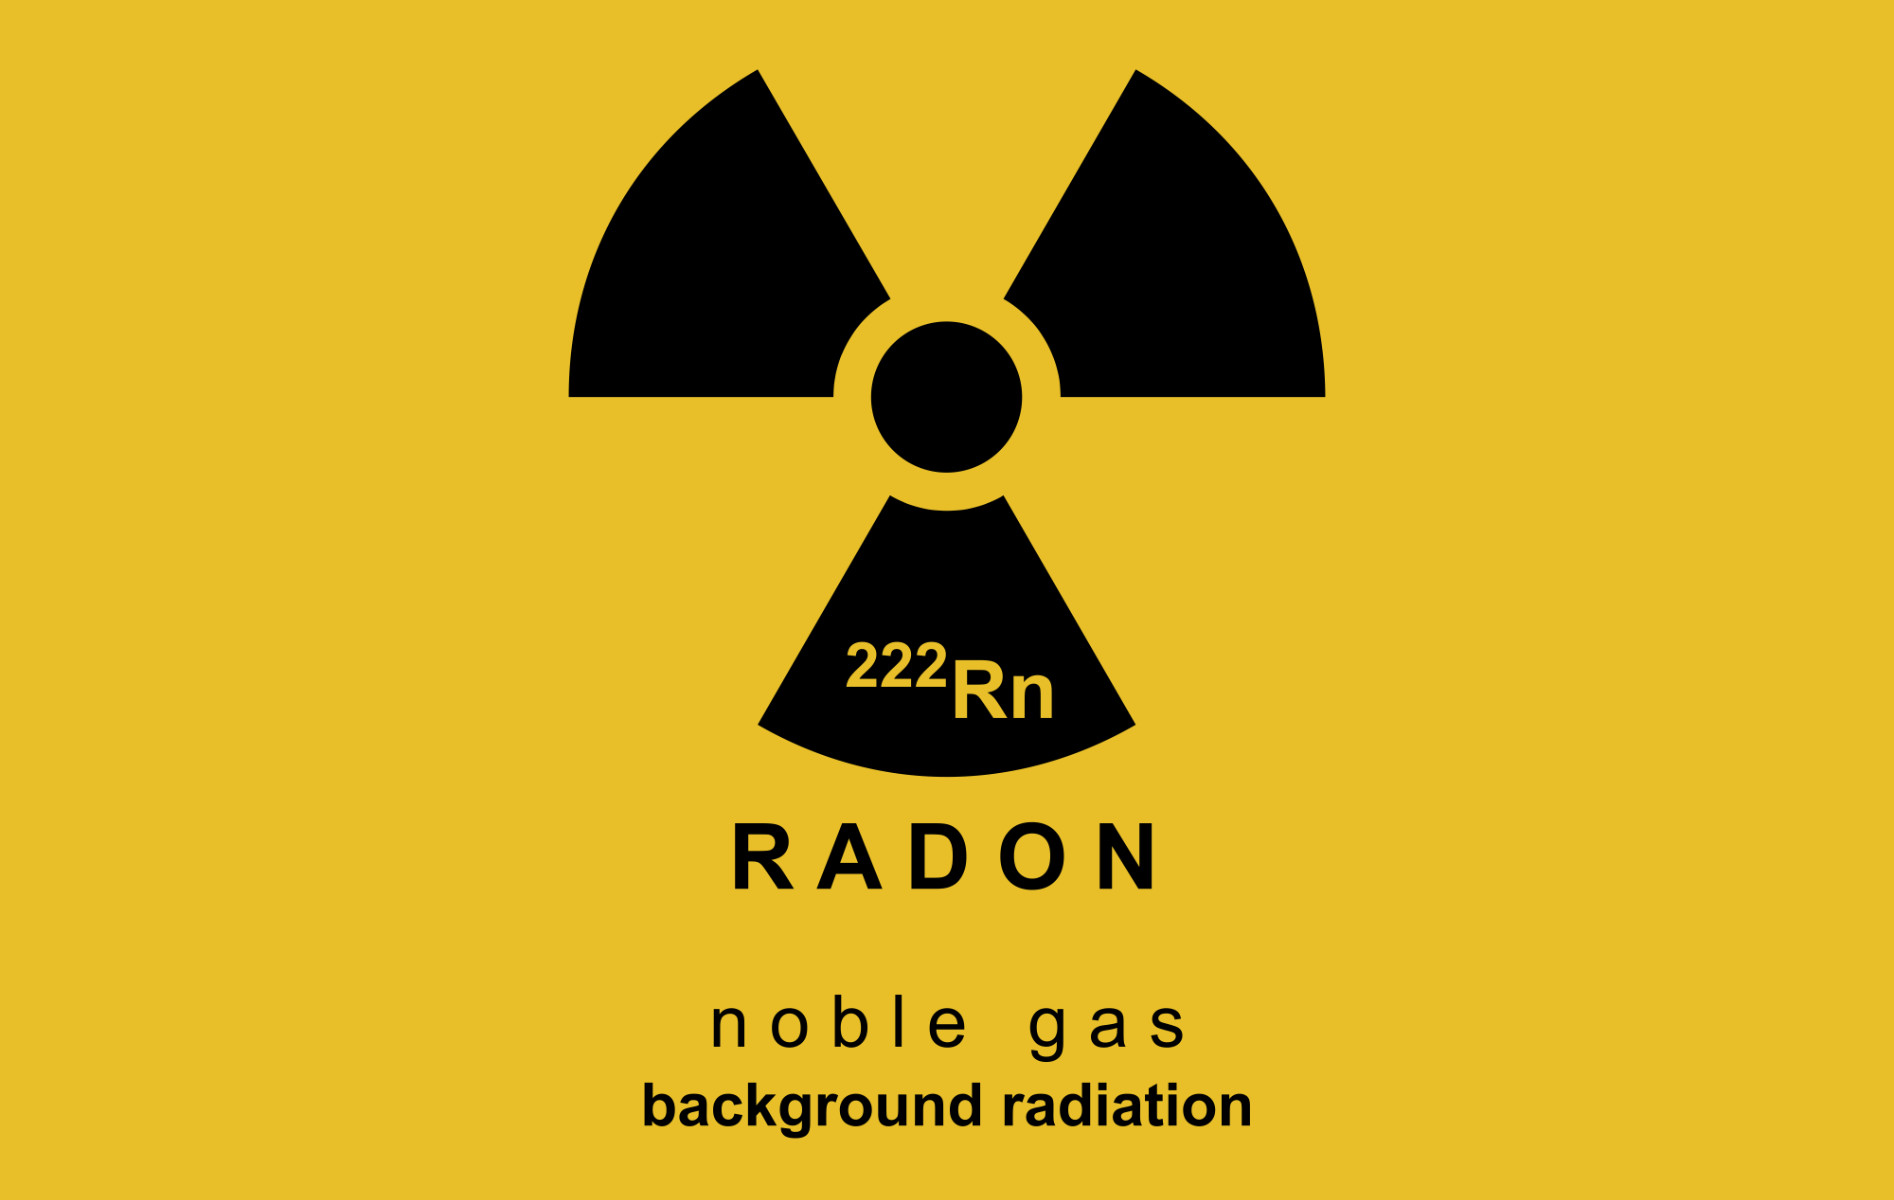 Importance of Radon Training